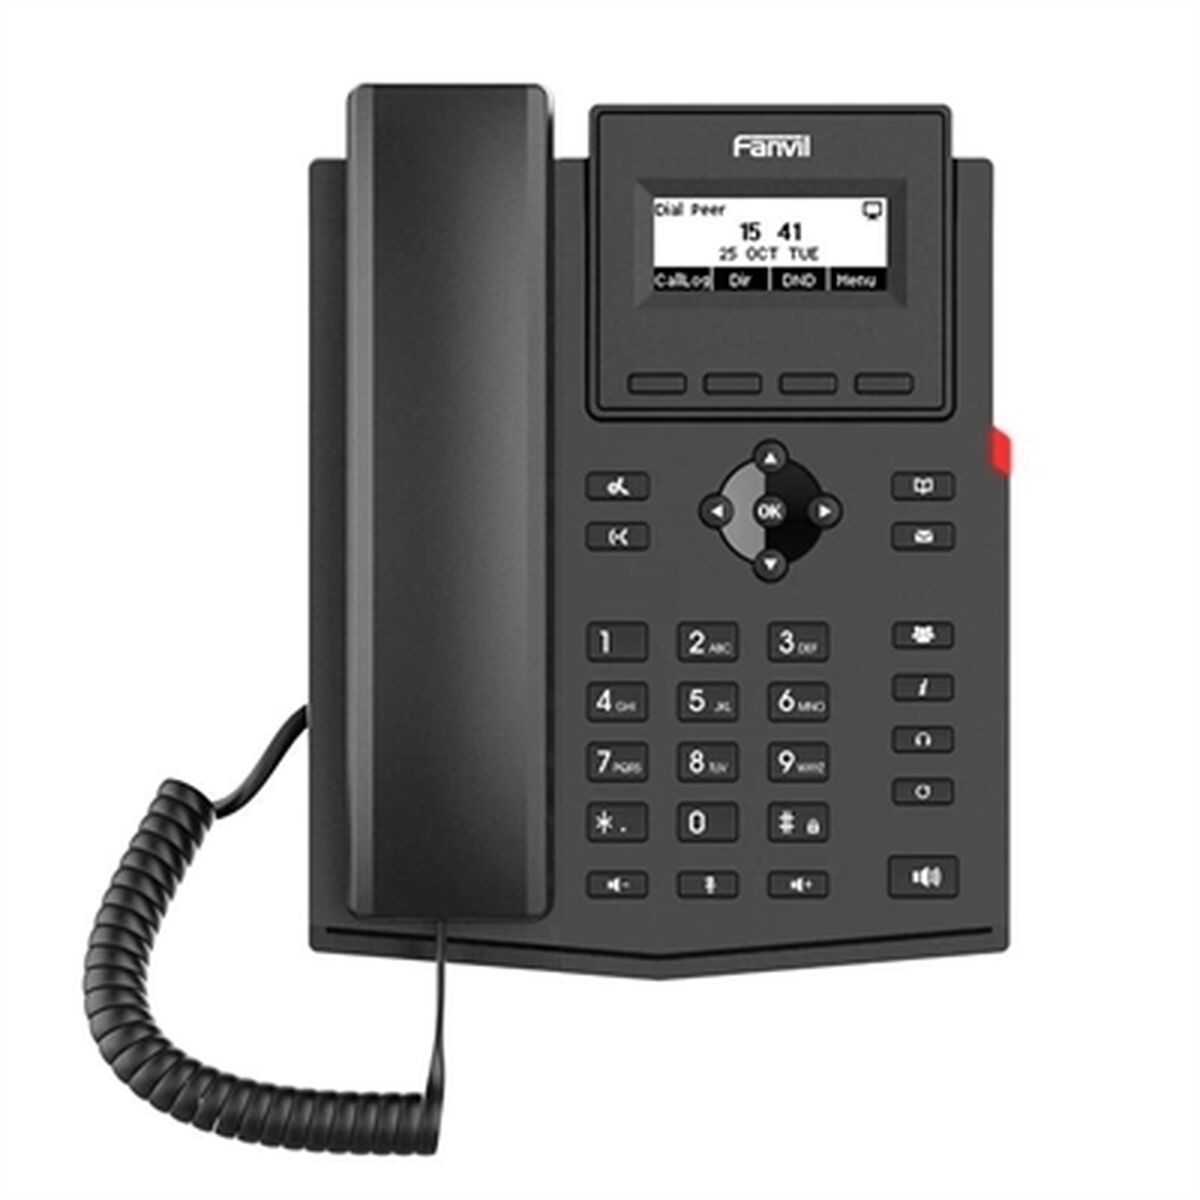 Landline Telephone Fanvil X301P, Fanvil, Electronics, Landline telephones and accessories, landline-telephone-fanvil-x301p, Brand_Fanvil, category-reference-2609, category-reference-2617, category-reference-2619, category-reference-t-18372, category-reference-t-19653, Condition_NEW, office, Price_50 - 100, telephones & tablets, Teleworking, RiotNook